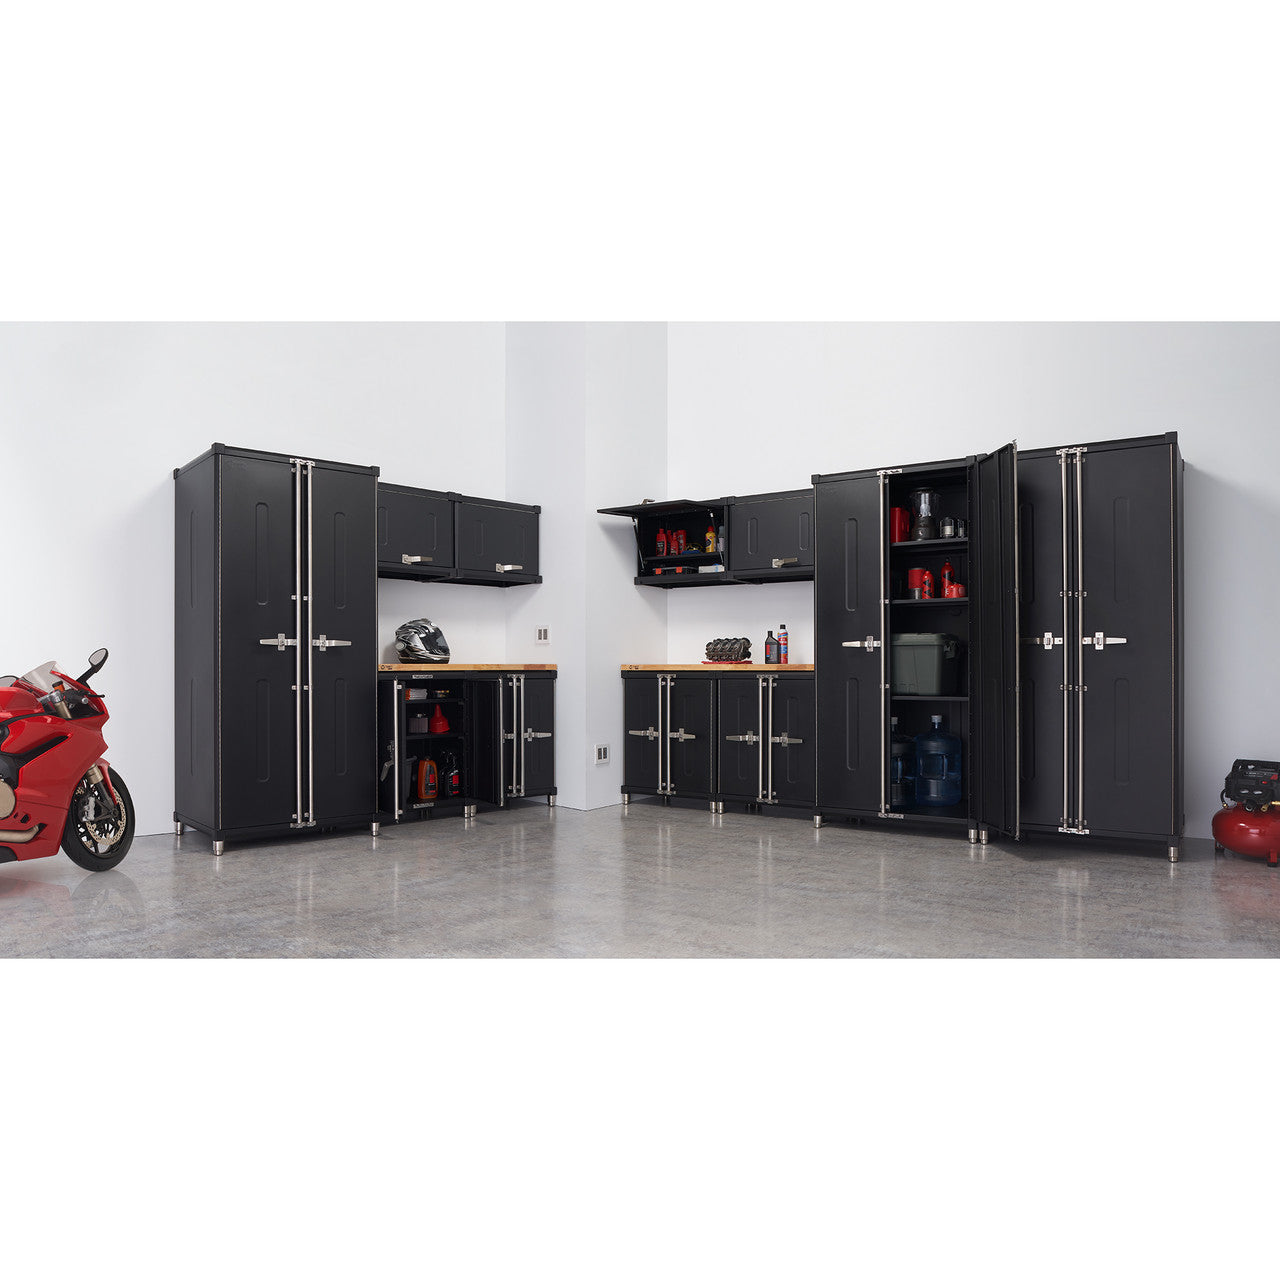 Trinity PRO 13-Piece Garage Cabinet Set Black